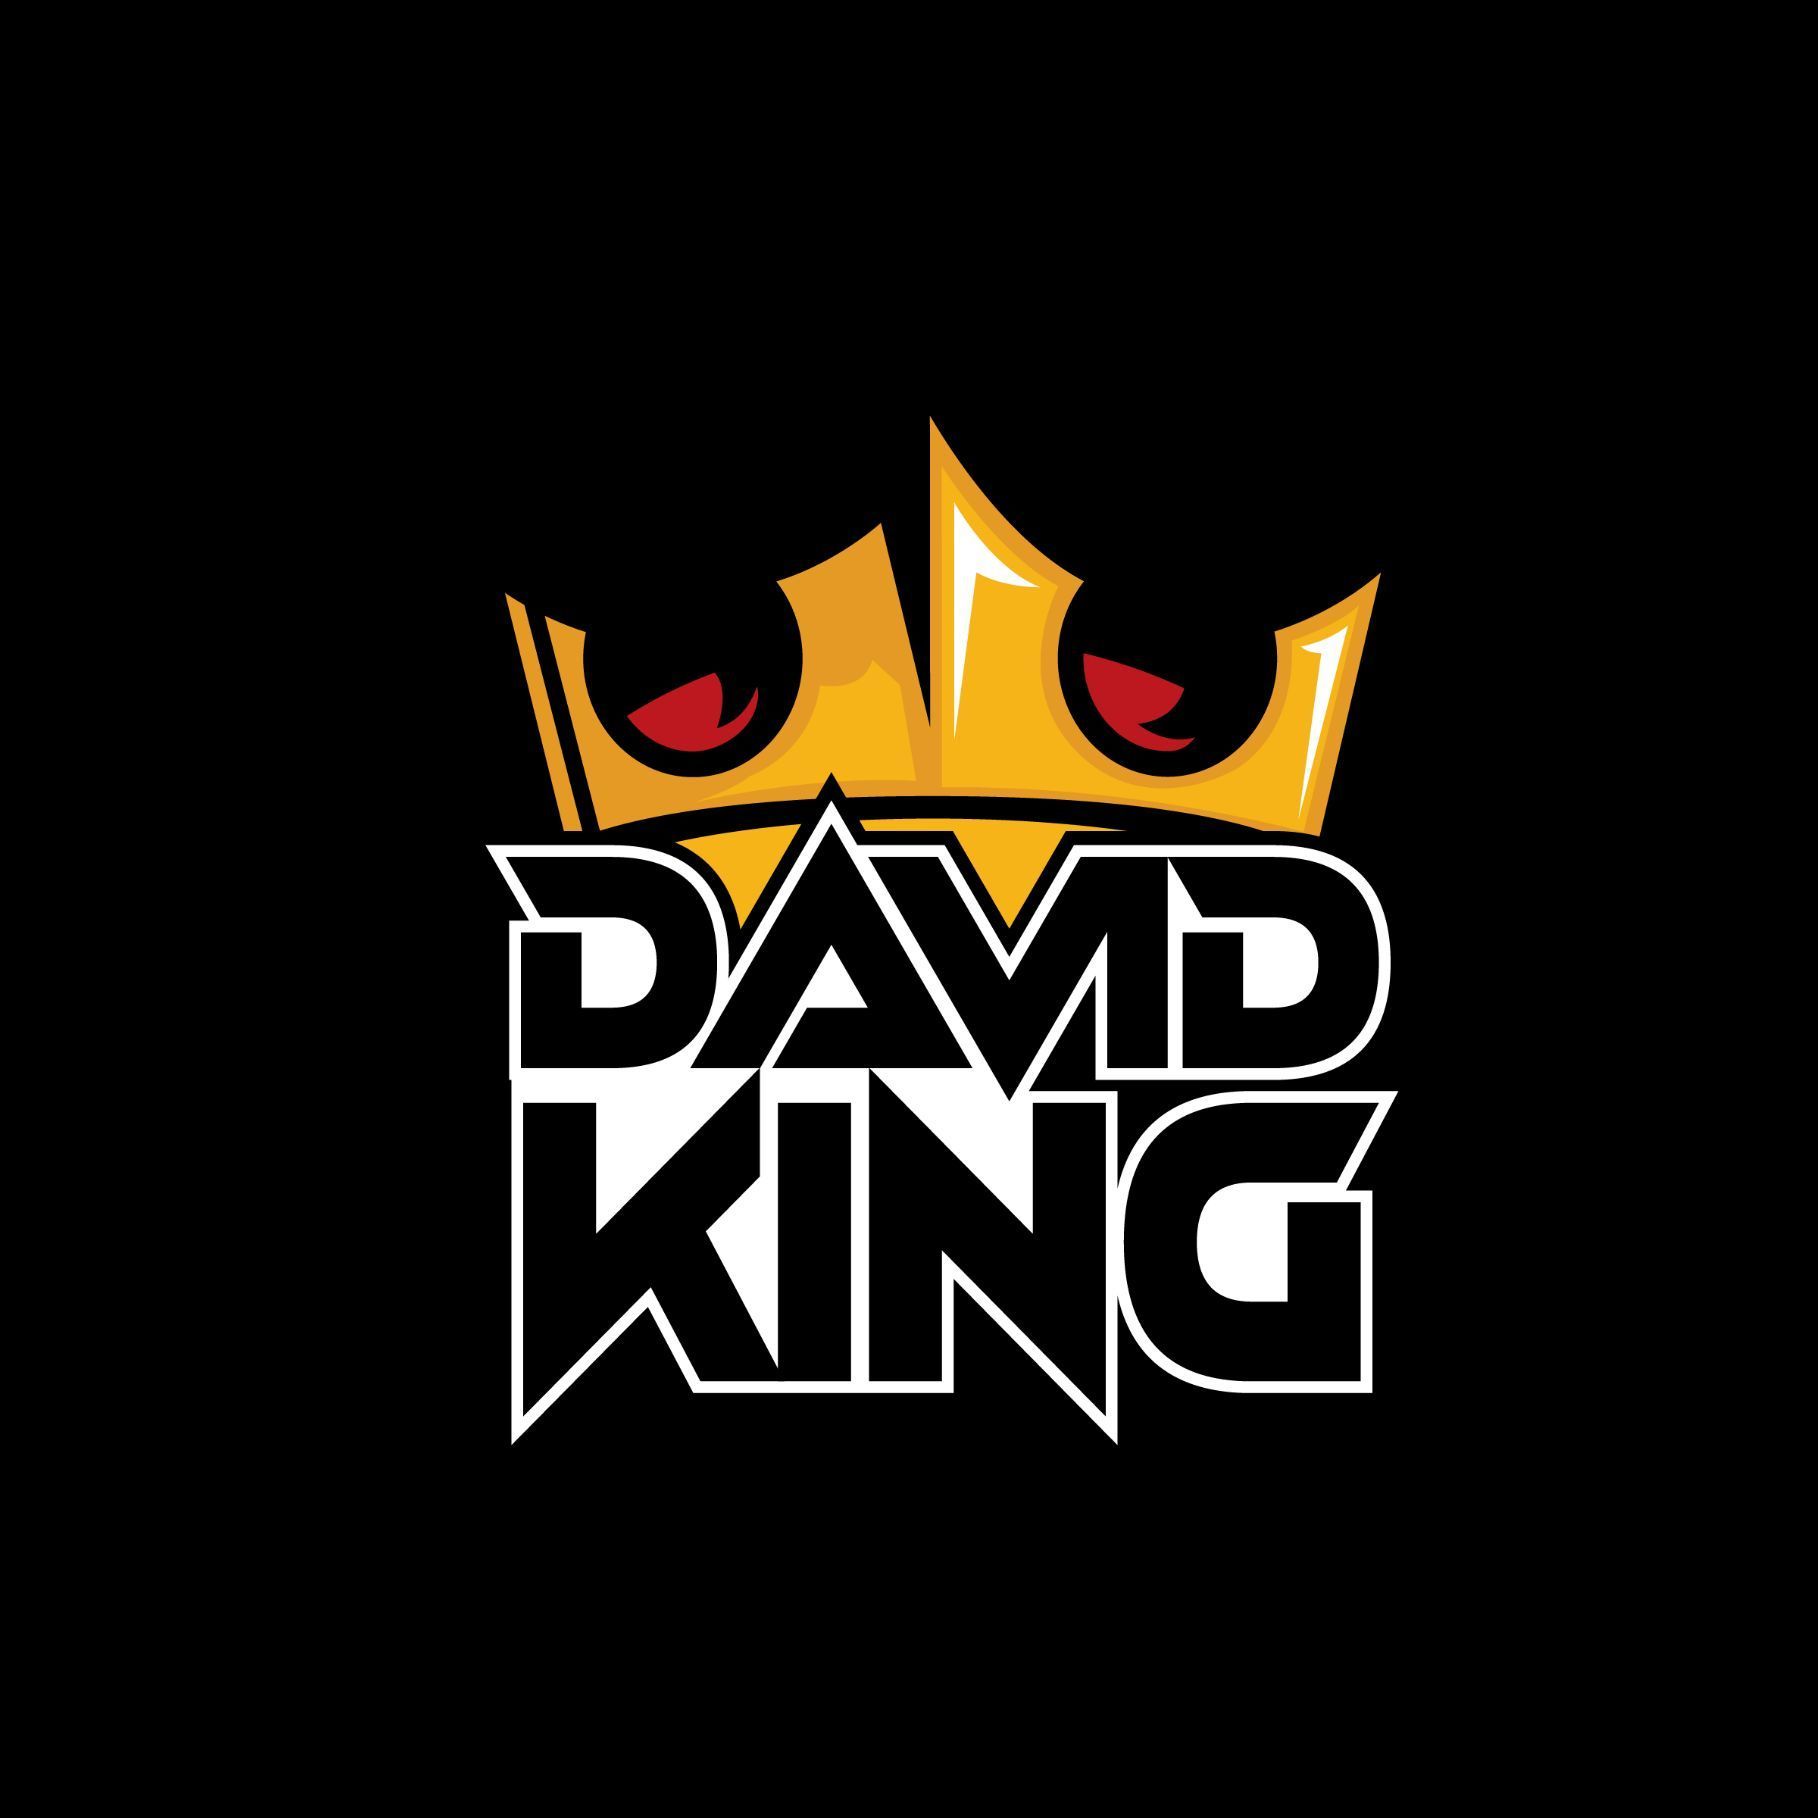 David king - Rufianes Barbería & Tattoo